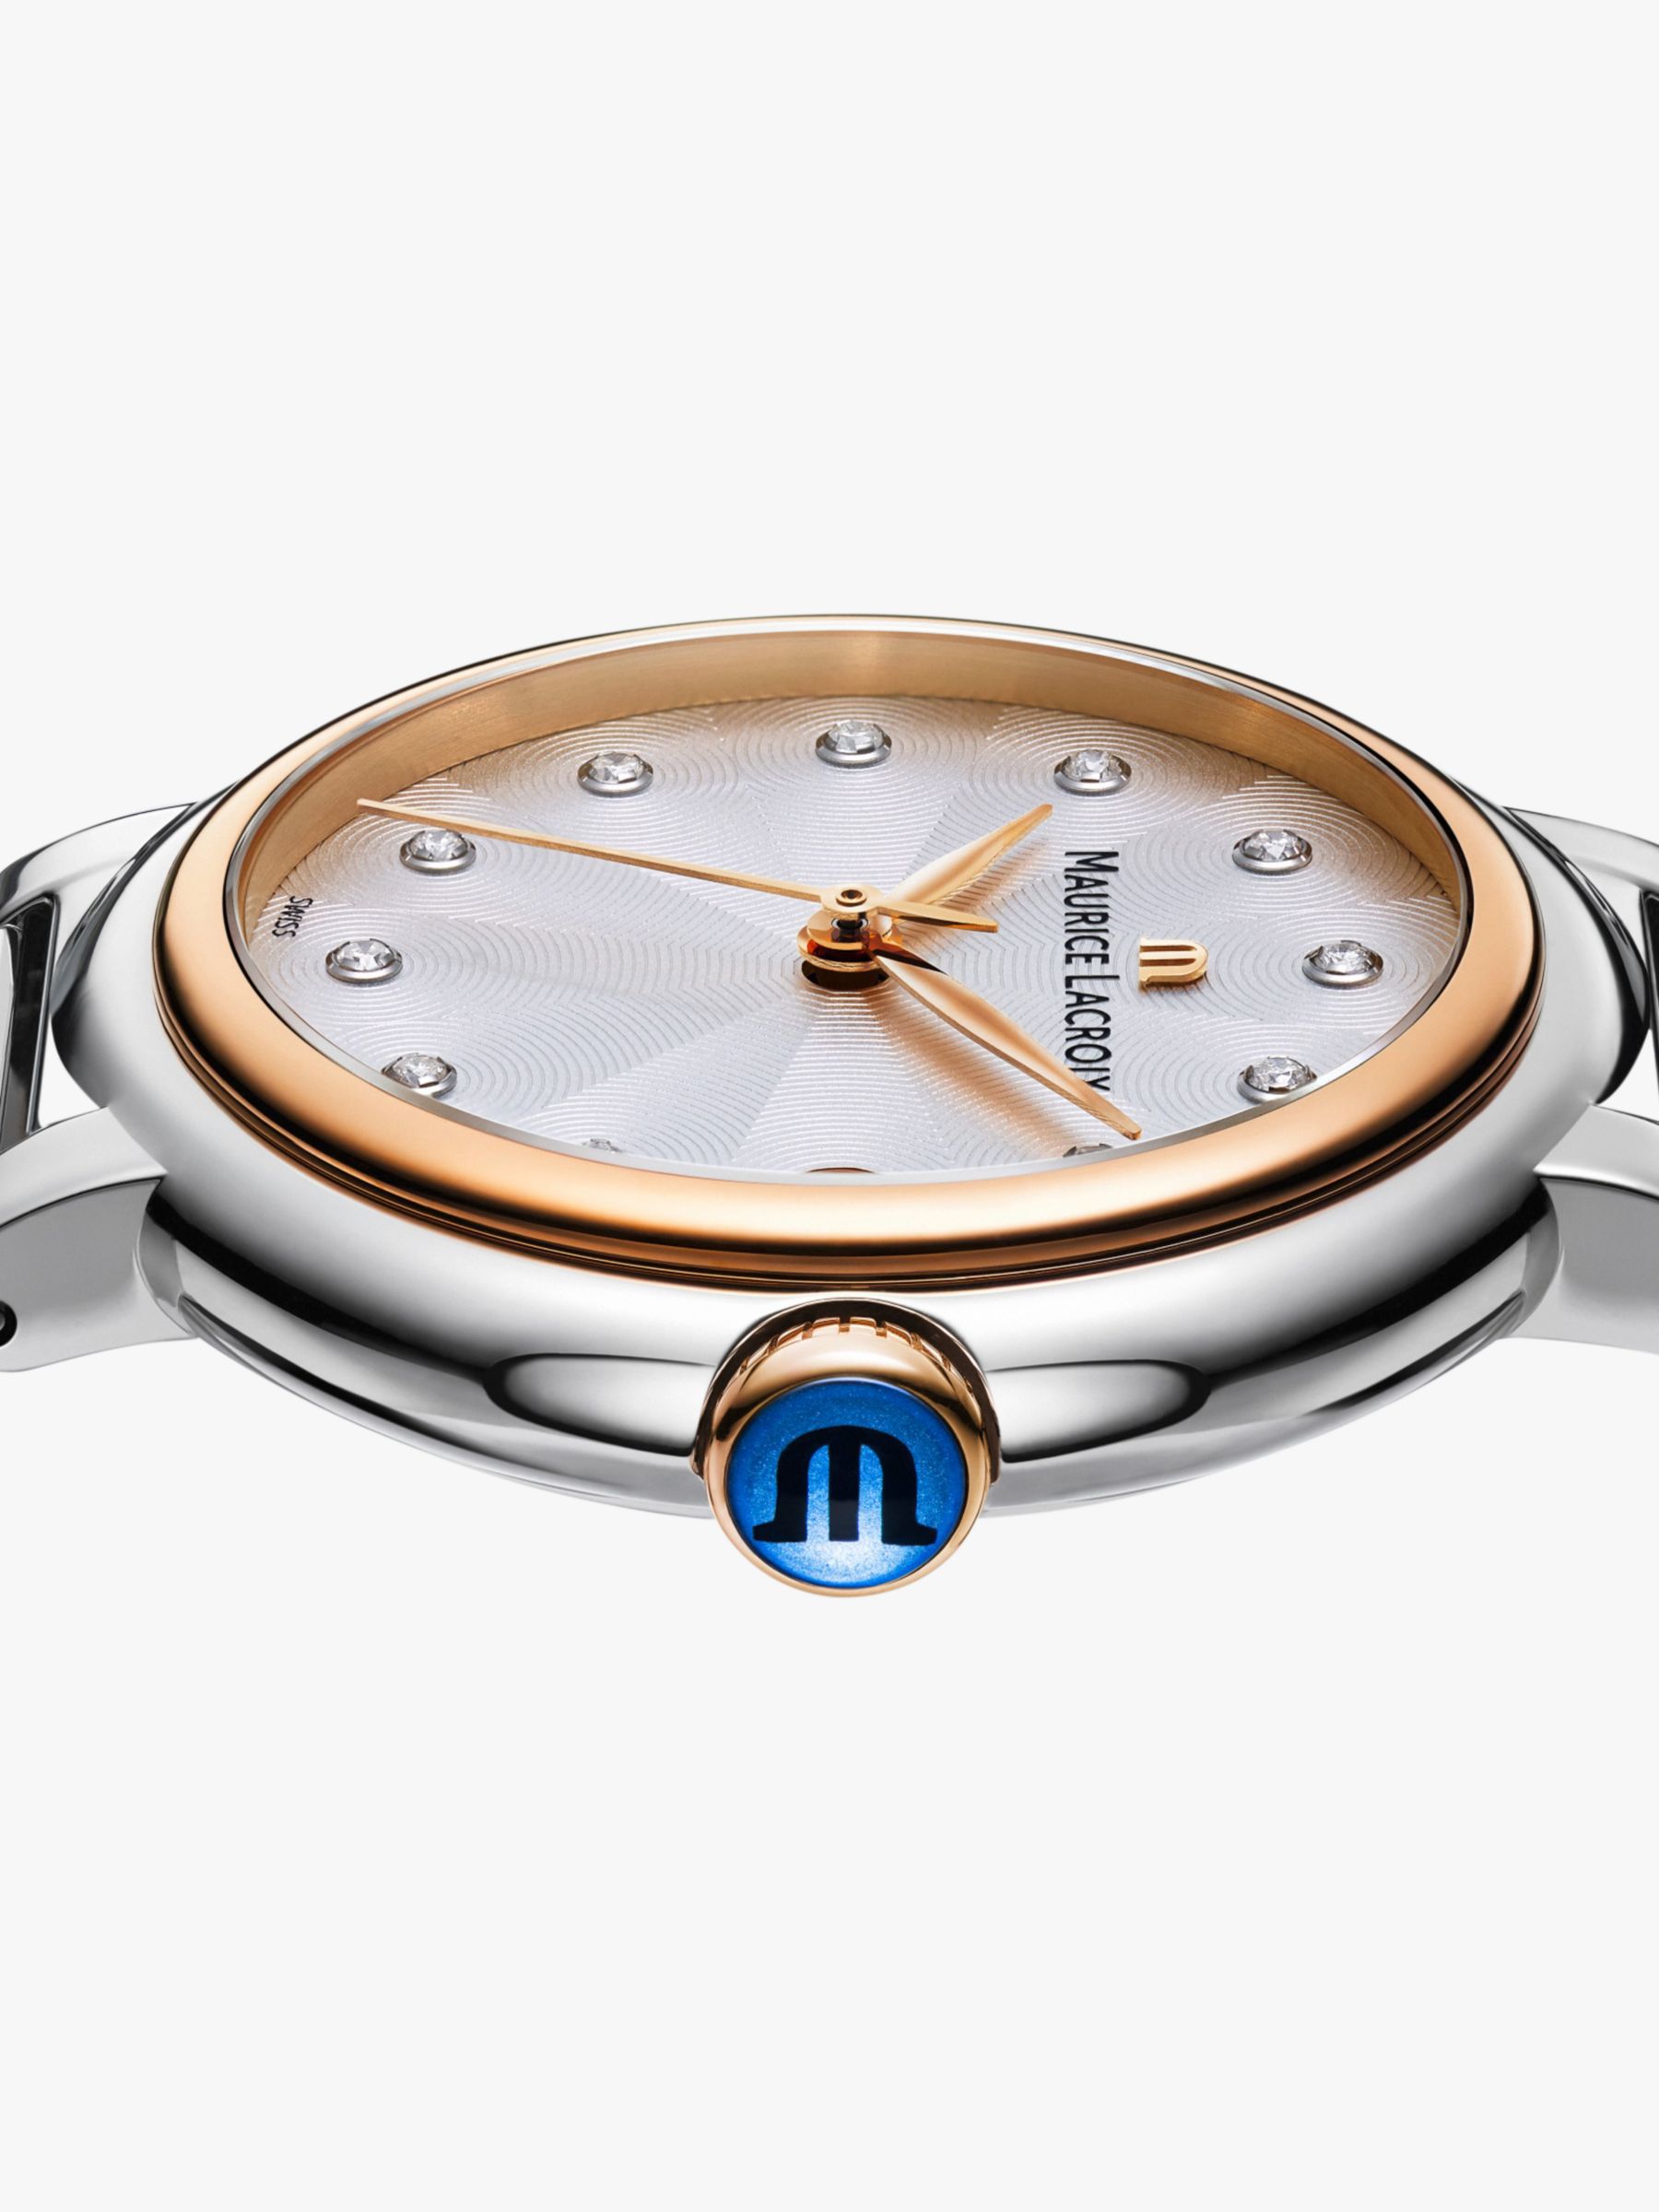 Maurice Lacroix FA1004-PVP13-150-1 Fiaba Diamond Date Bracelet Strap Watch, Multi/White